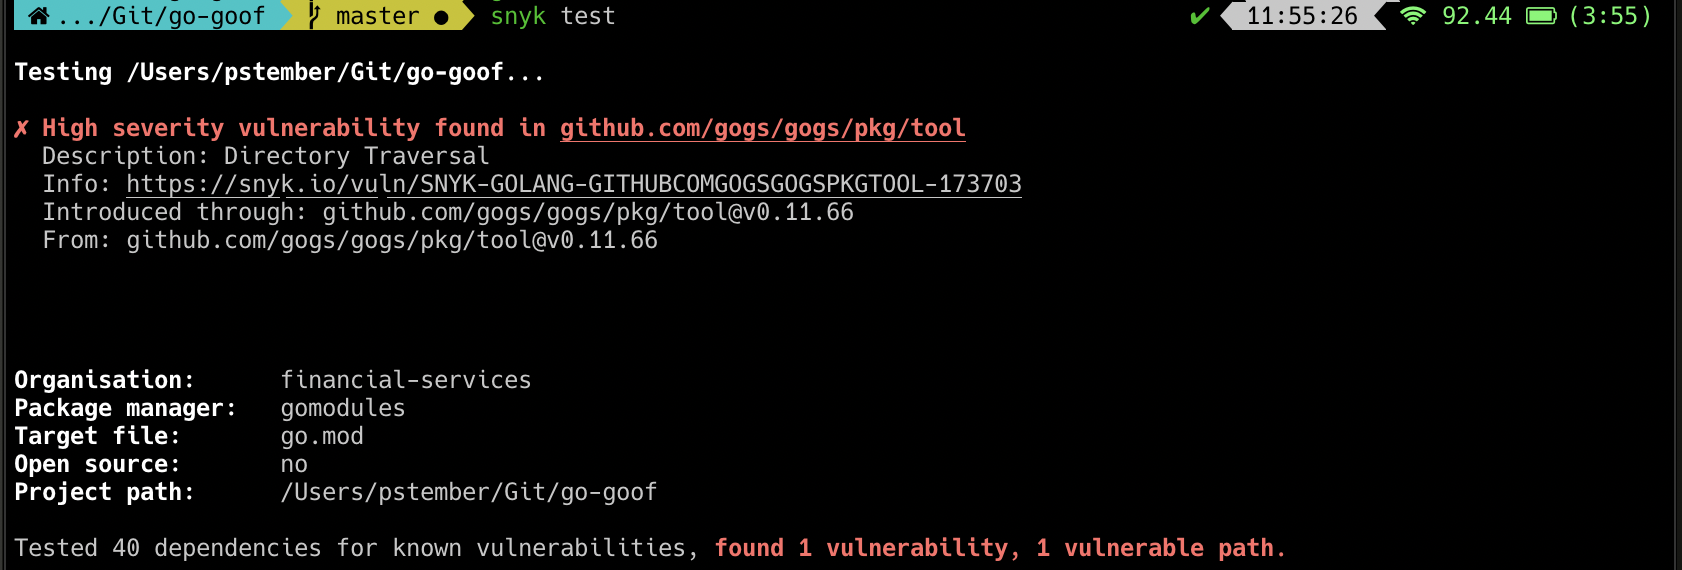 Vulnerability detection screenshot